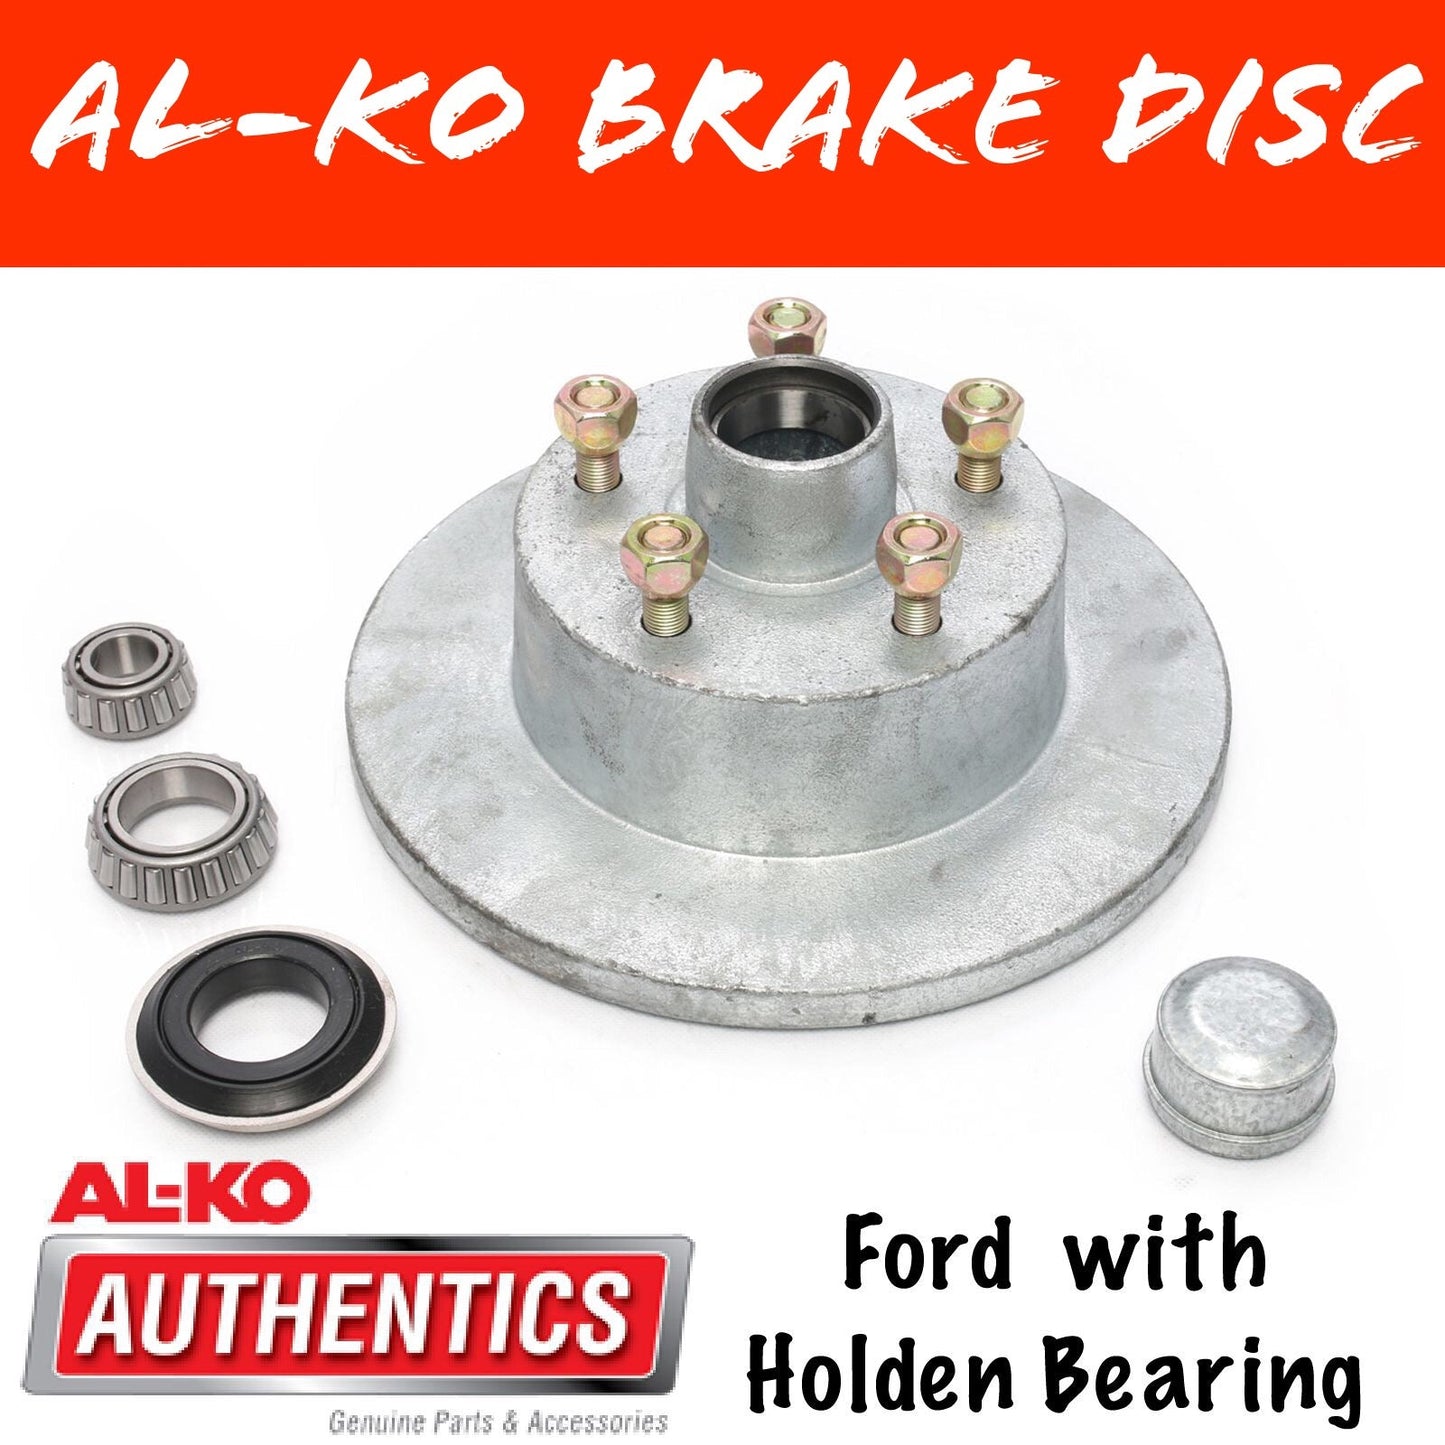 AL-KO Galvanised Ford Brake Disc with Holden Bearings